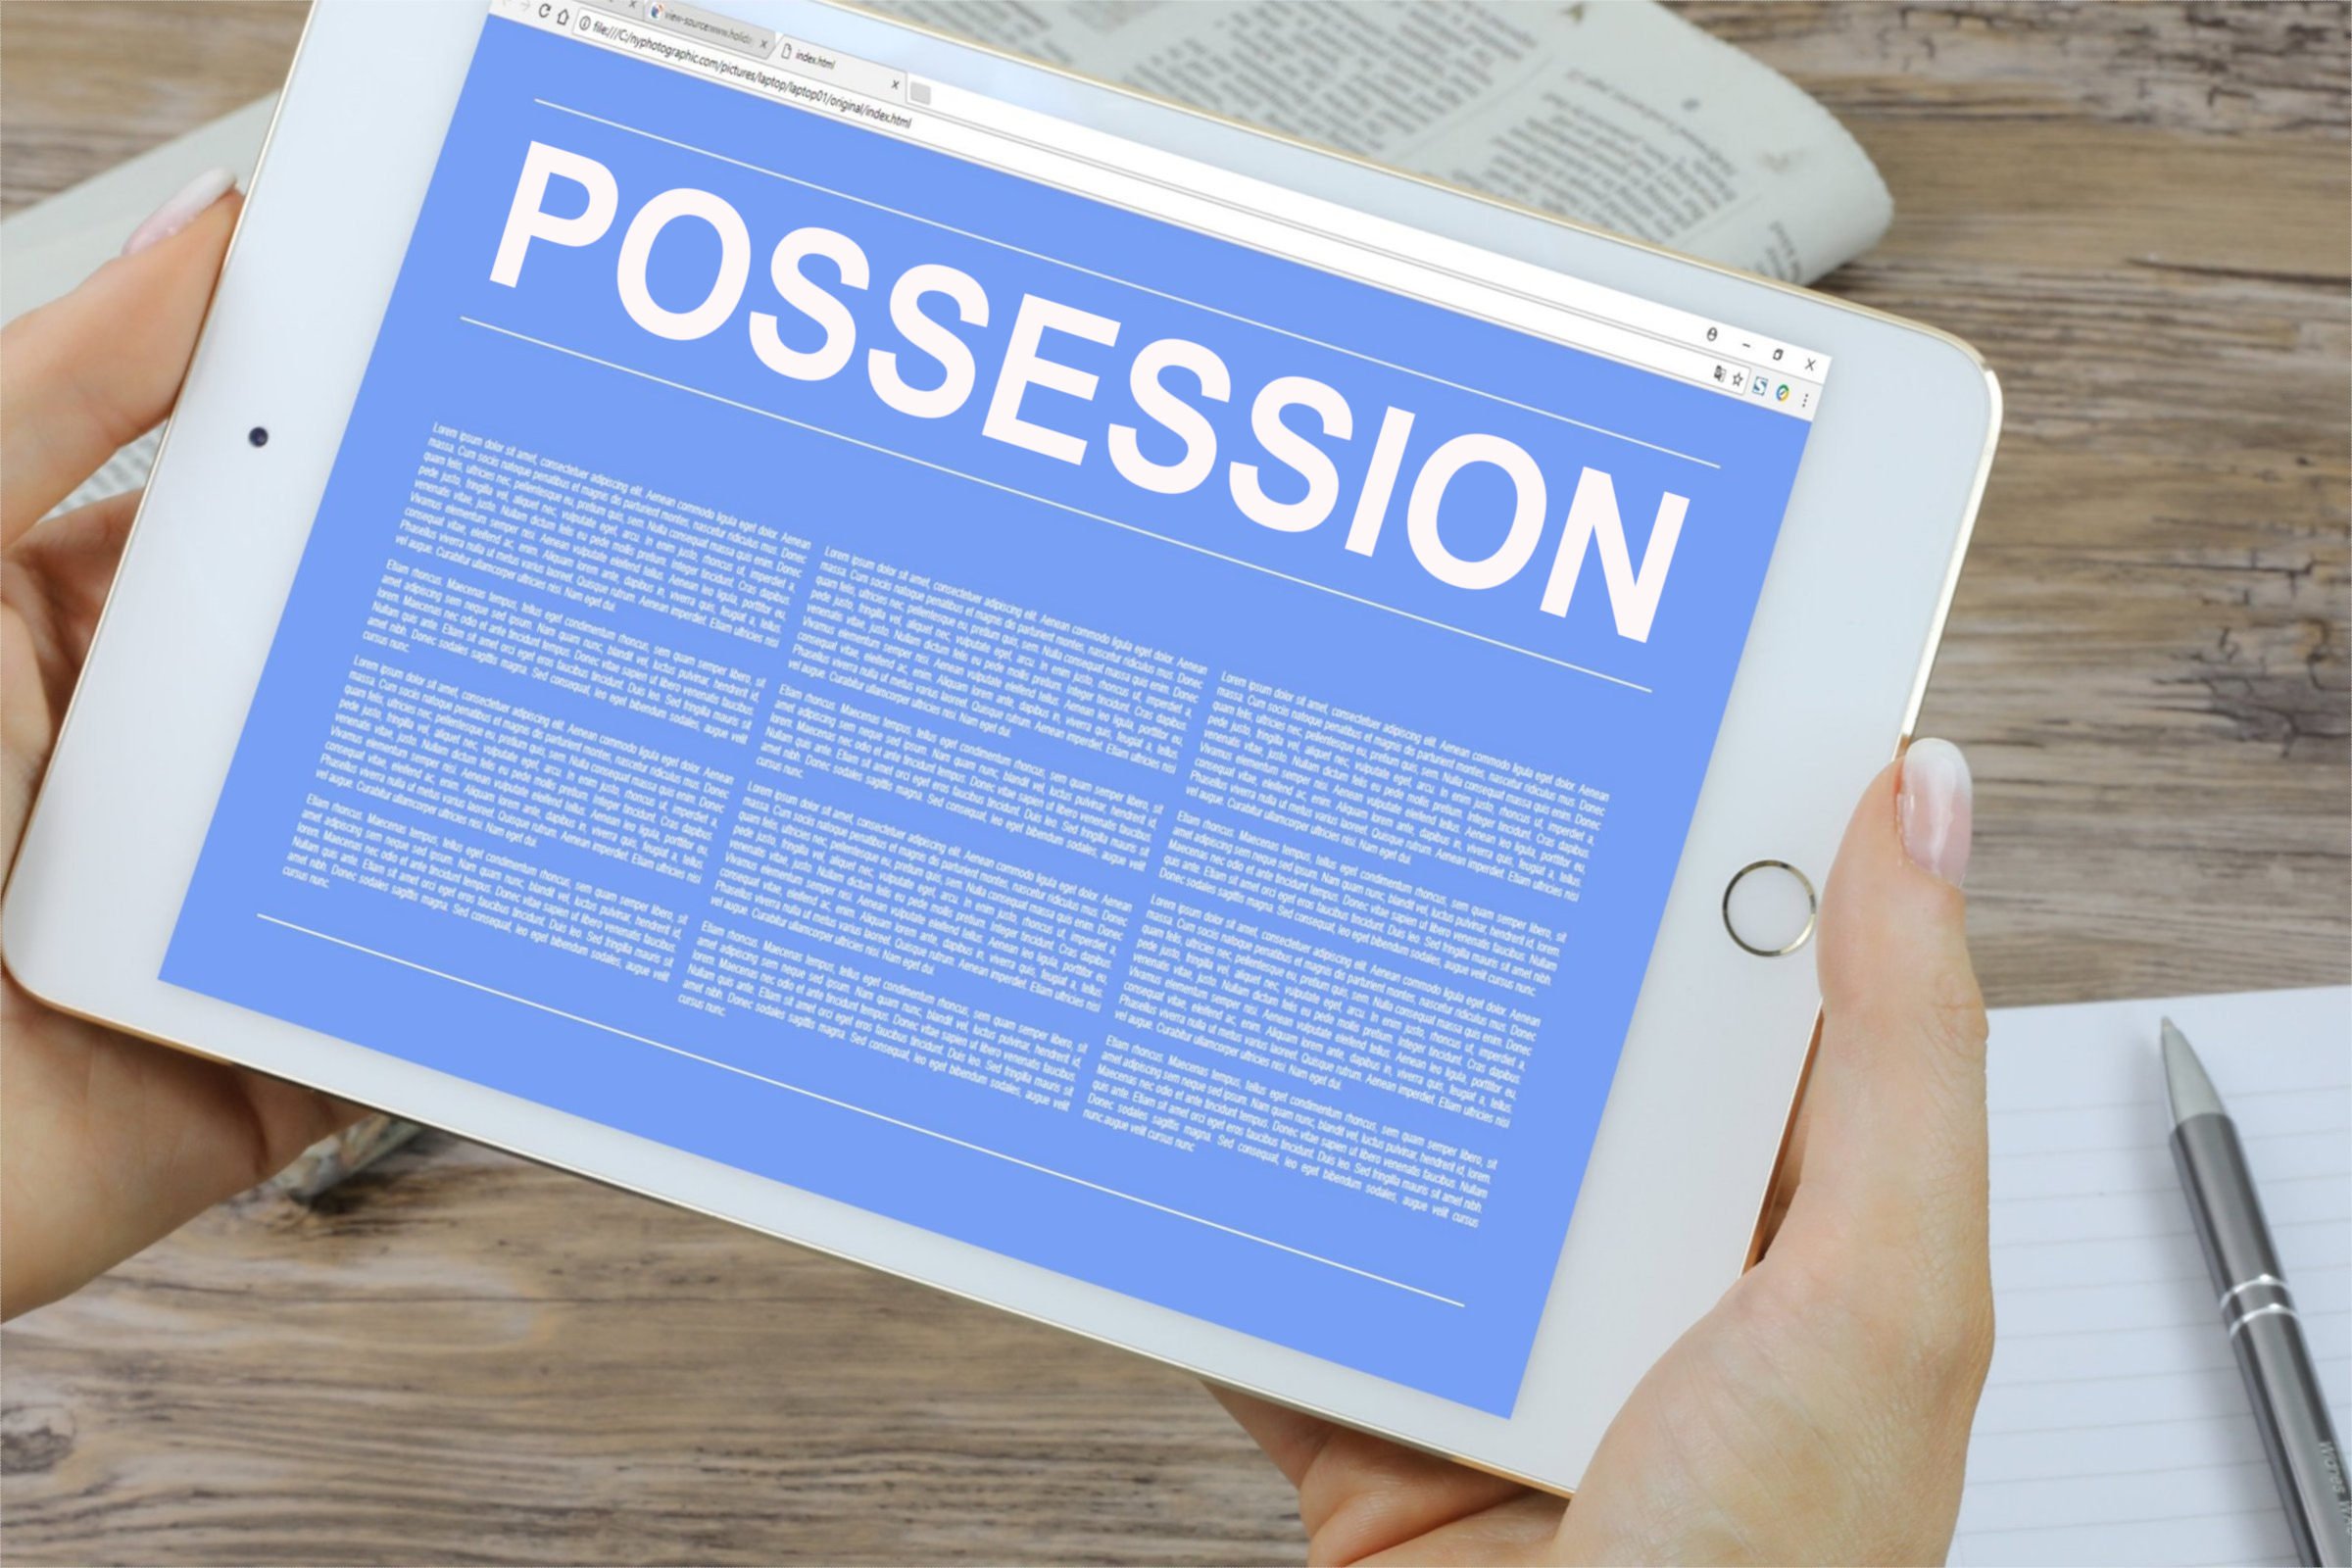 possession